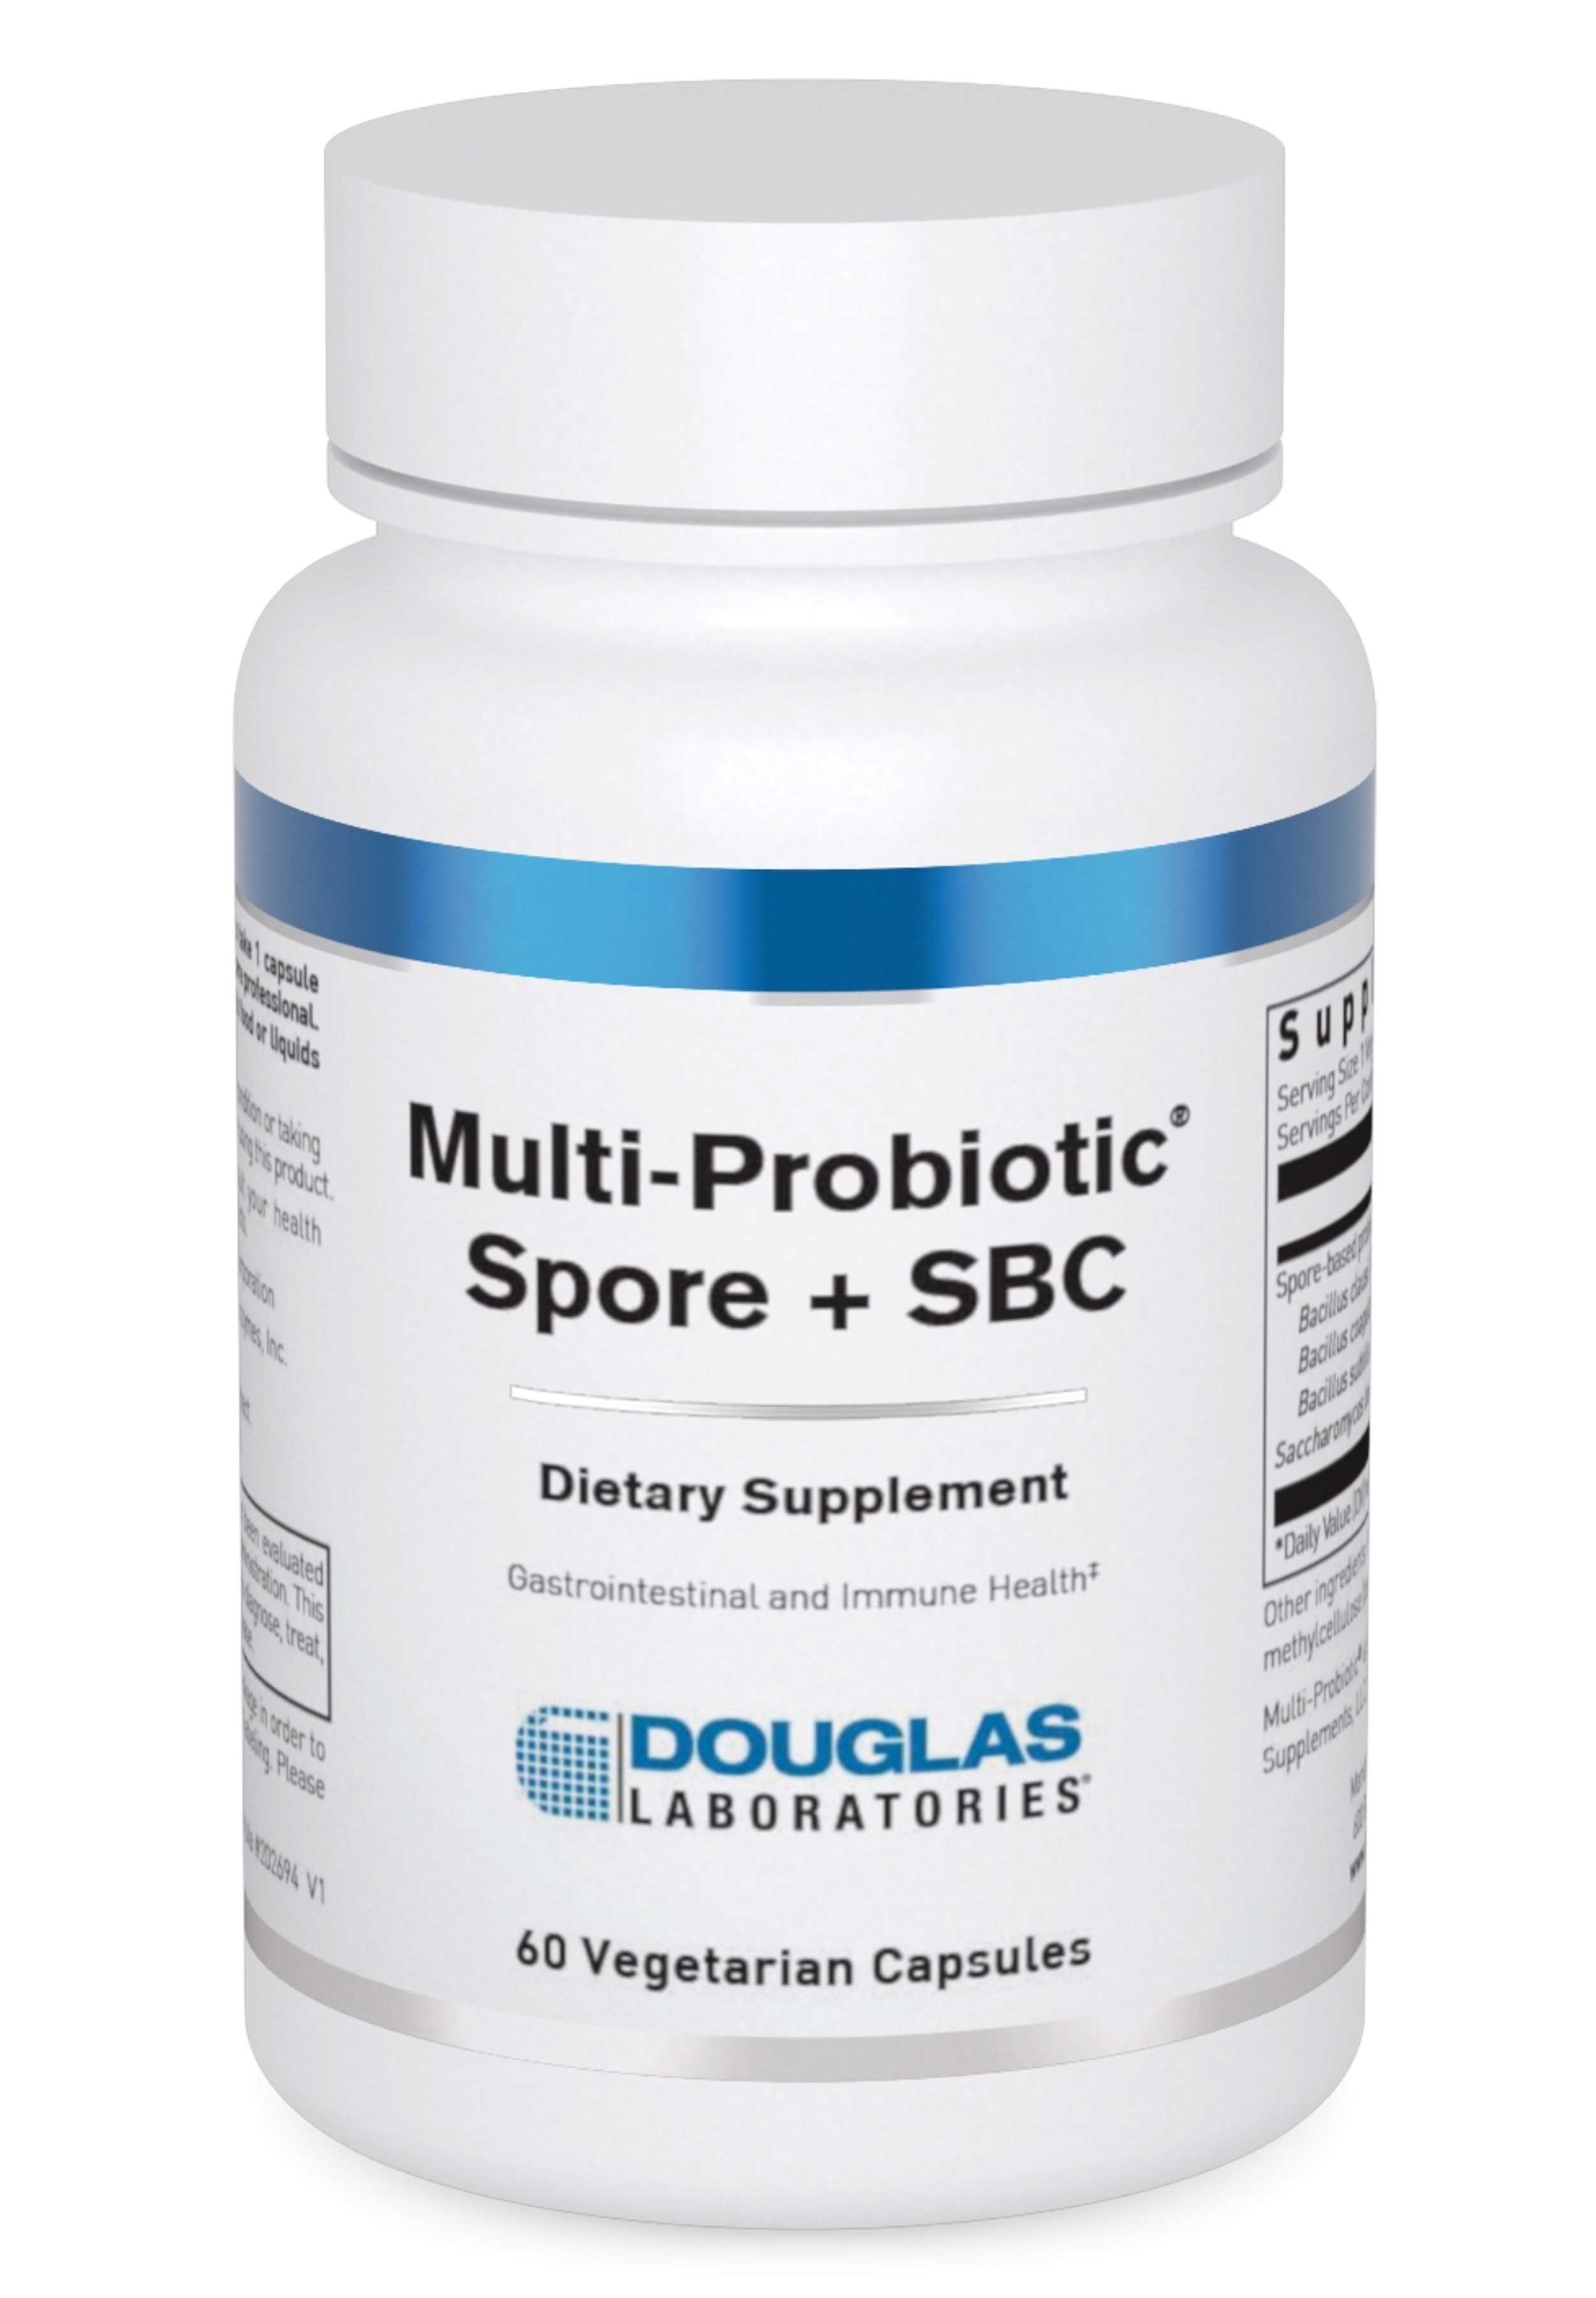 Douglas Laboratories Multi-Probiotic Spore + SBC